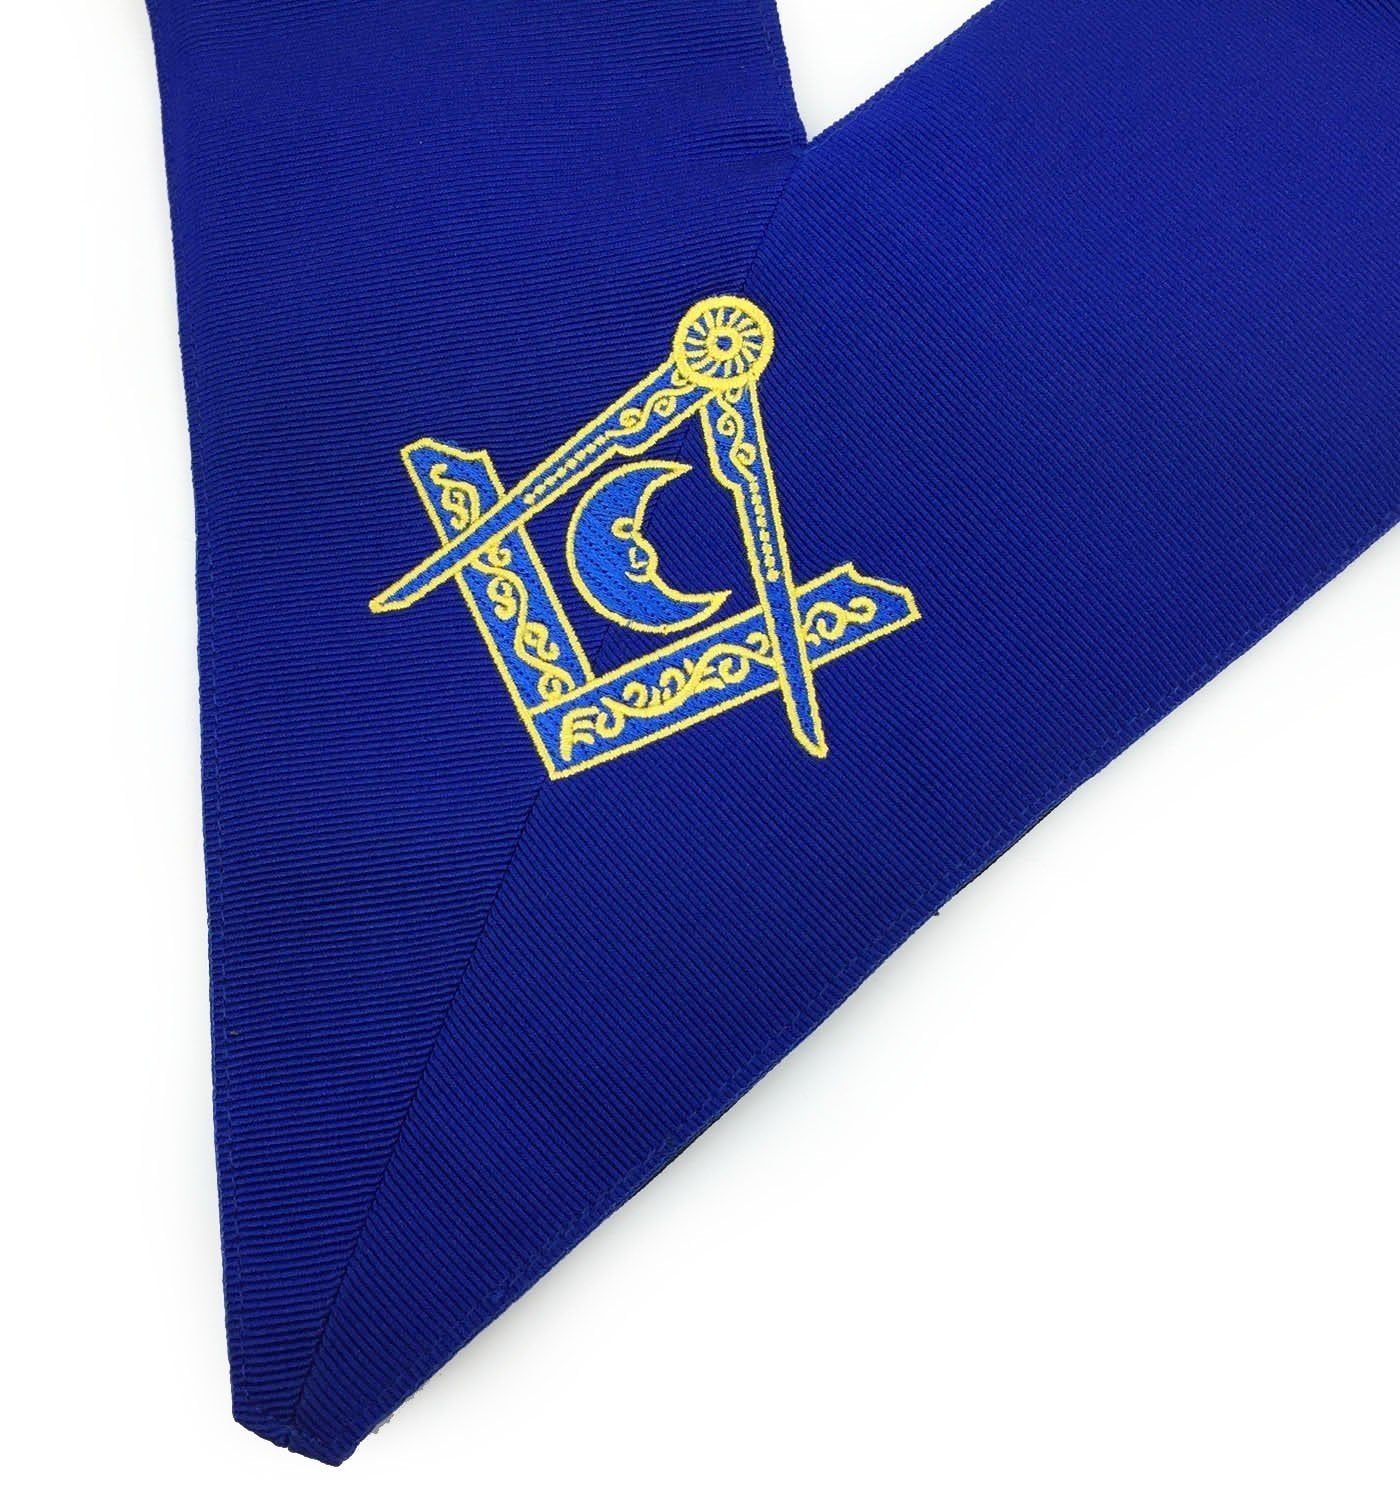 Blue Lodge Officers Collar Set of 12 Machine Embroidery Collars - Bricks Masons